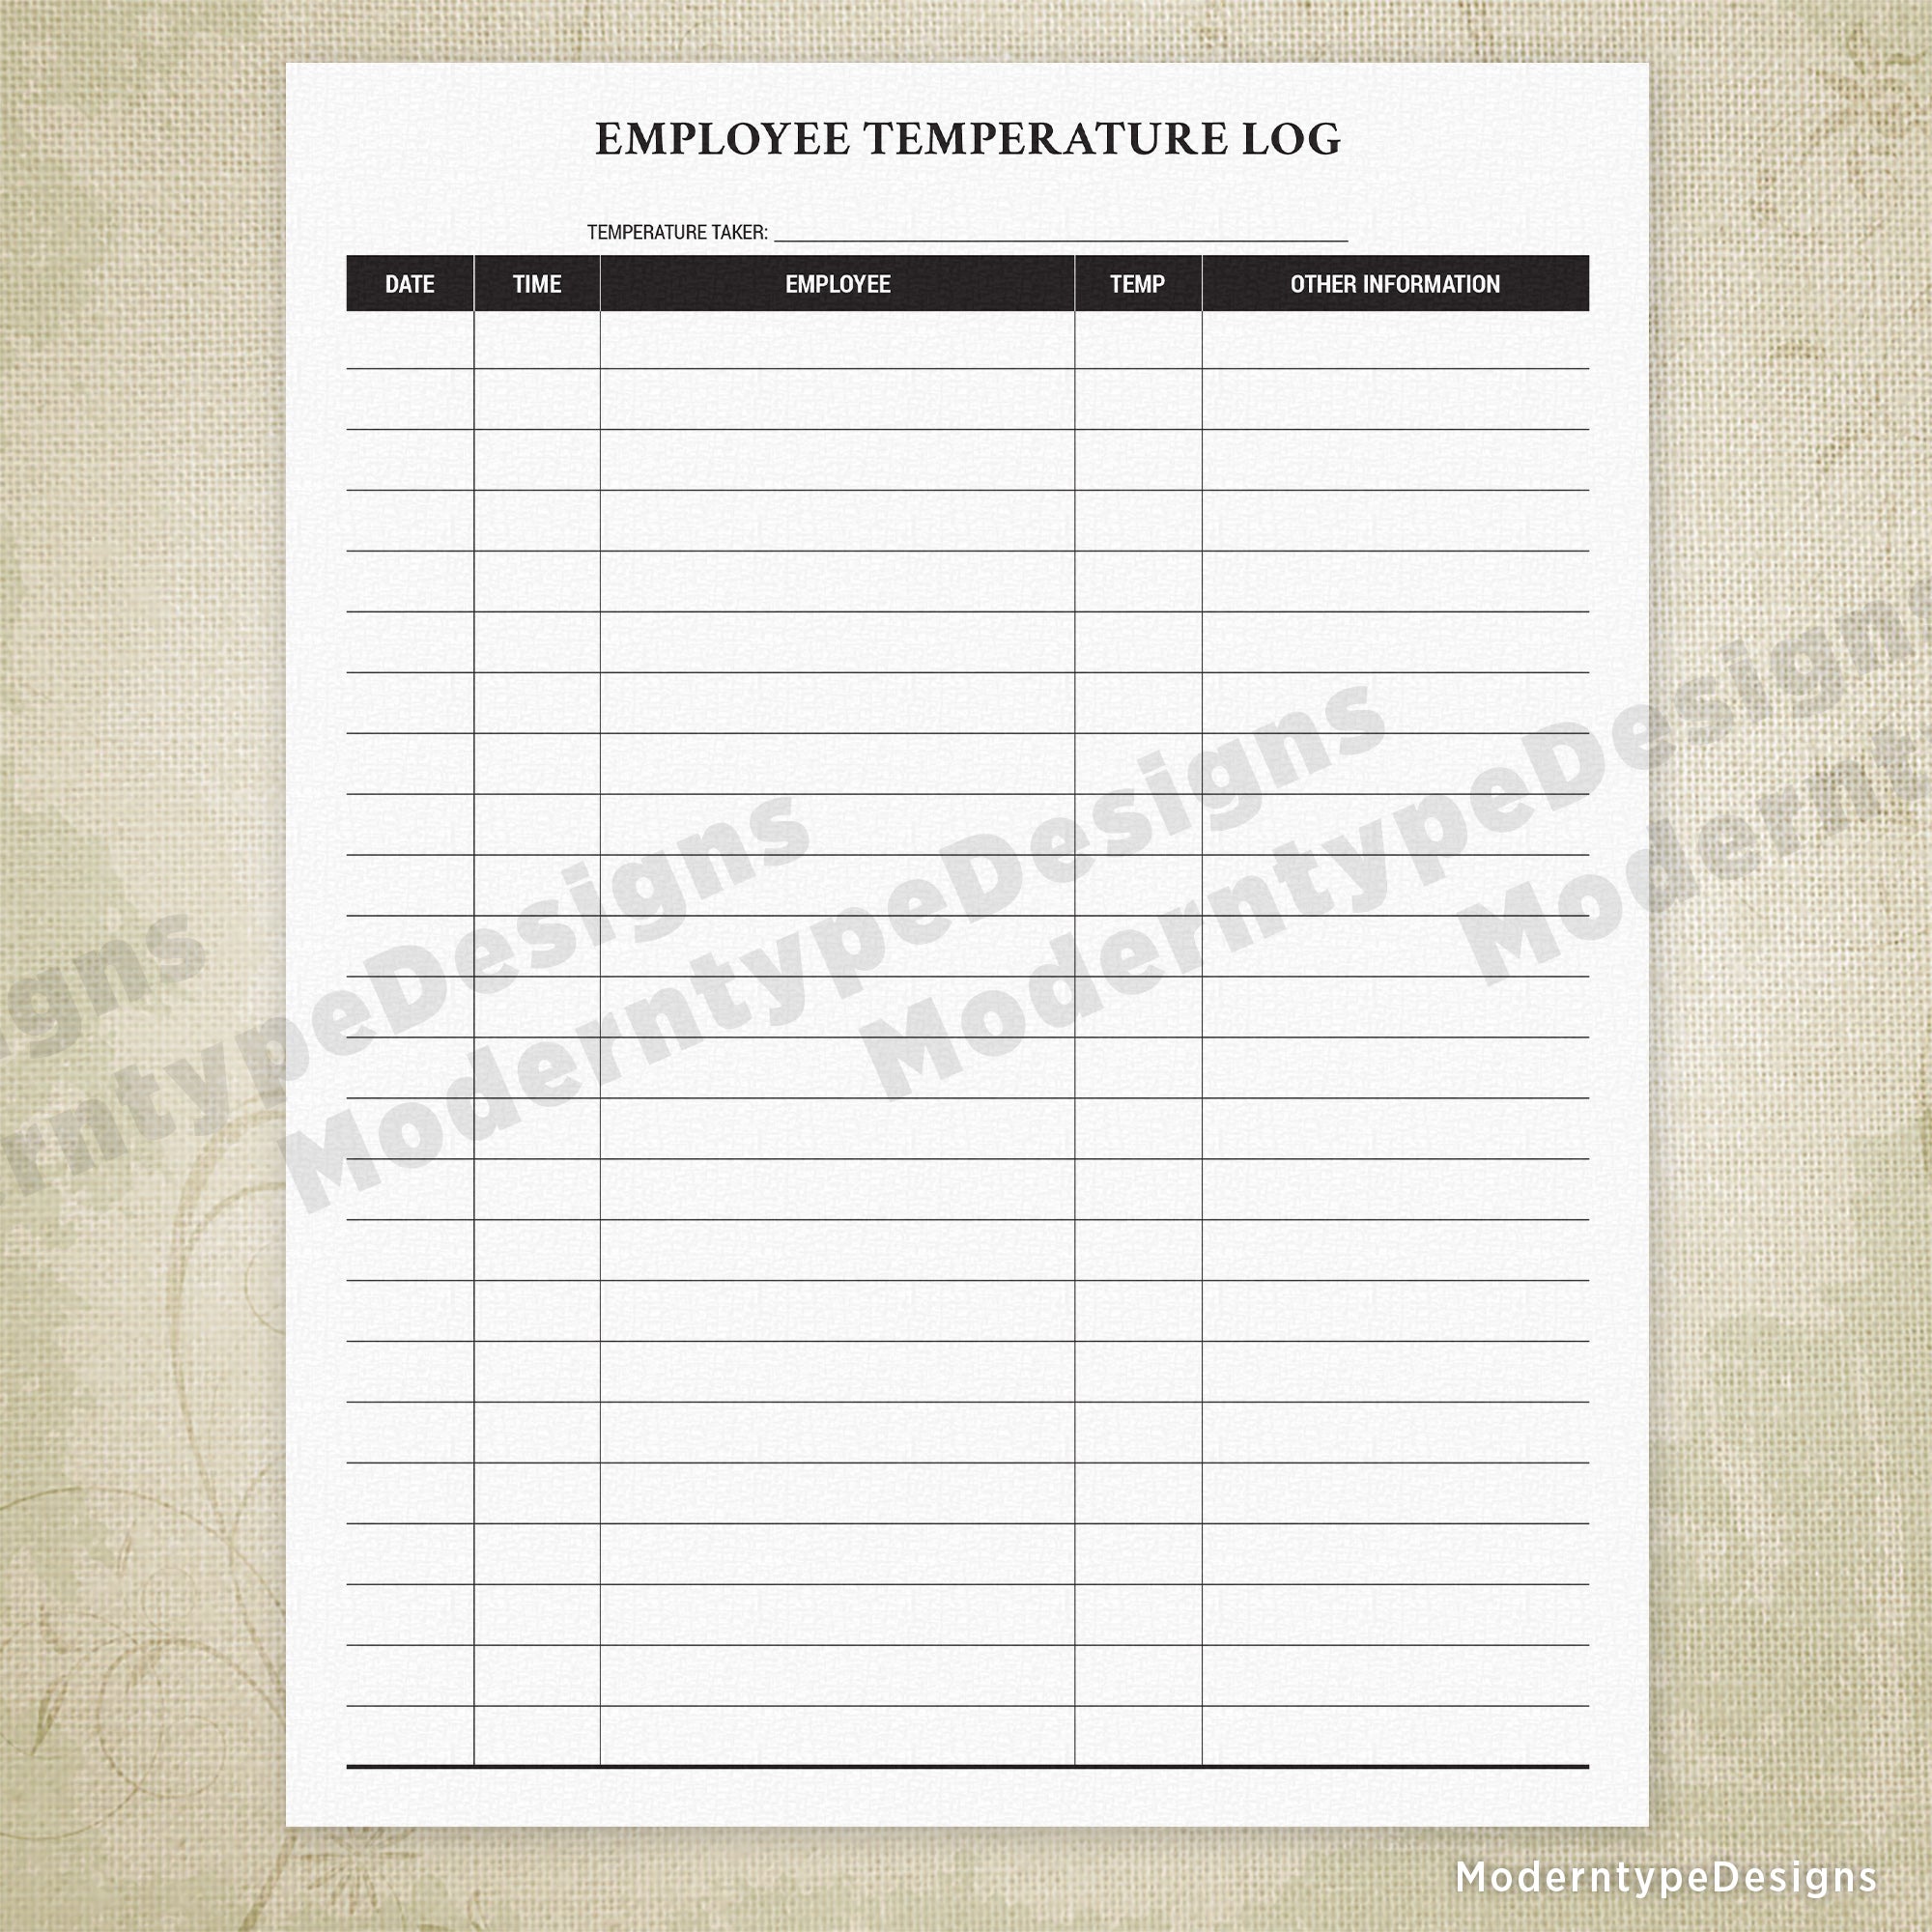 Employee Temperature Log Printable Form